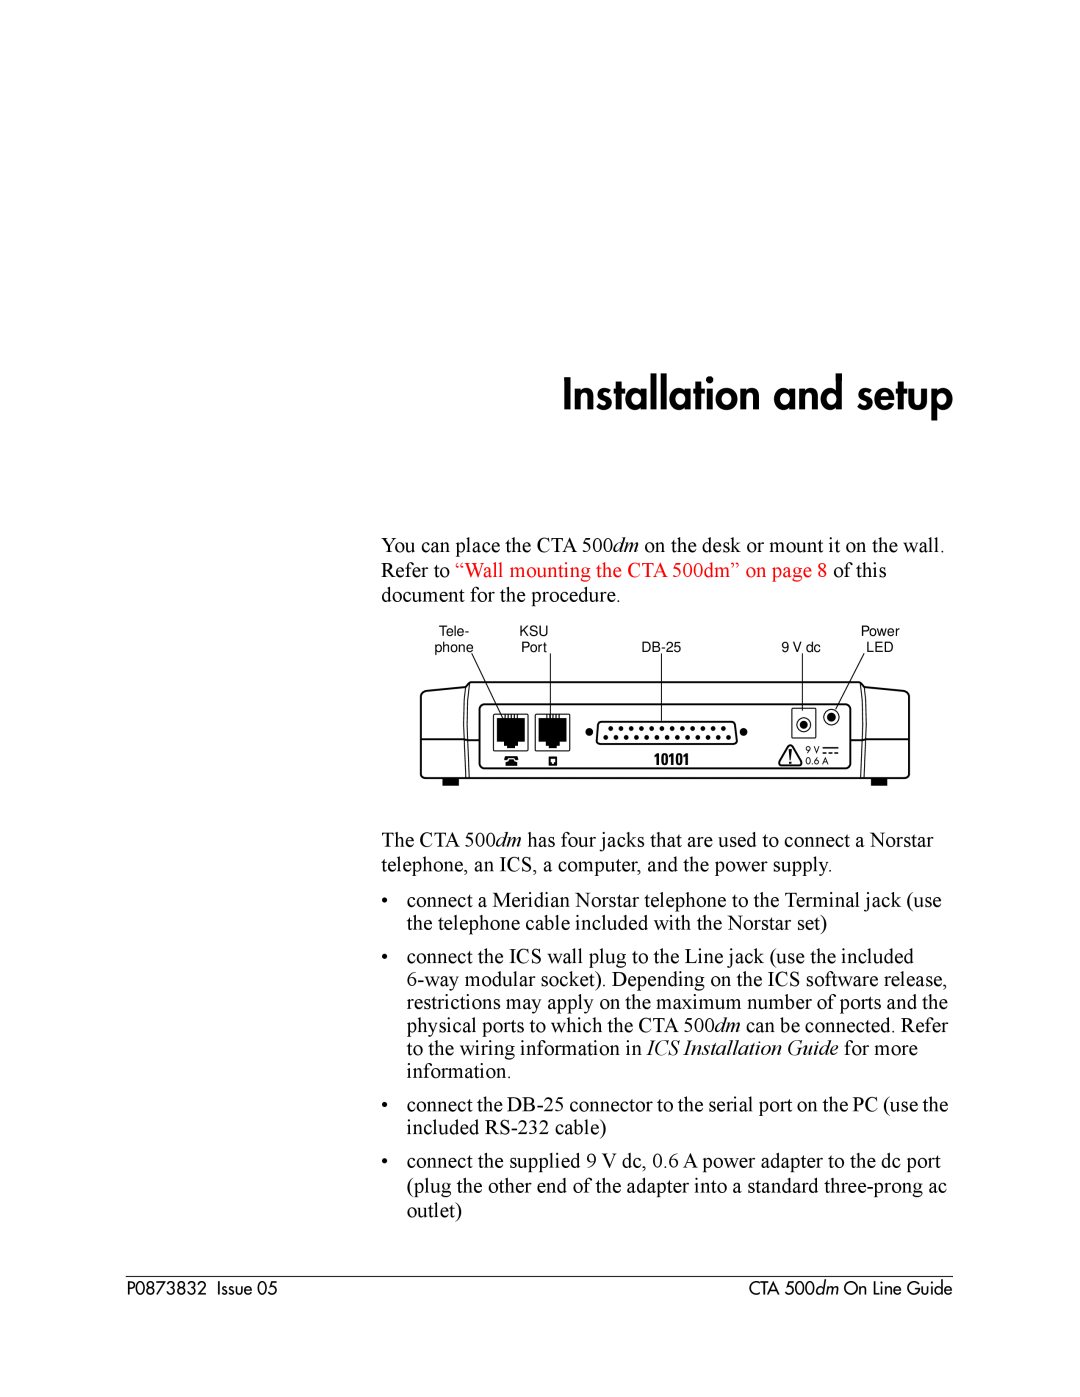 Nortel Networks CTA 500dm manual Installation and setup 